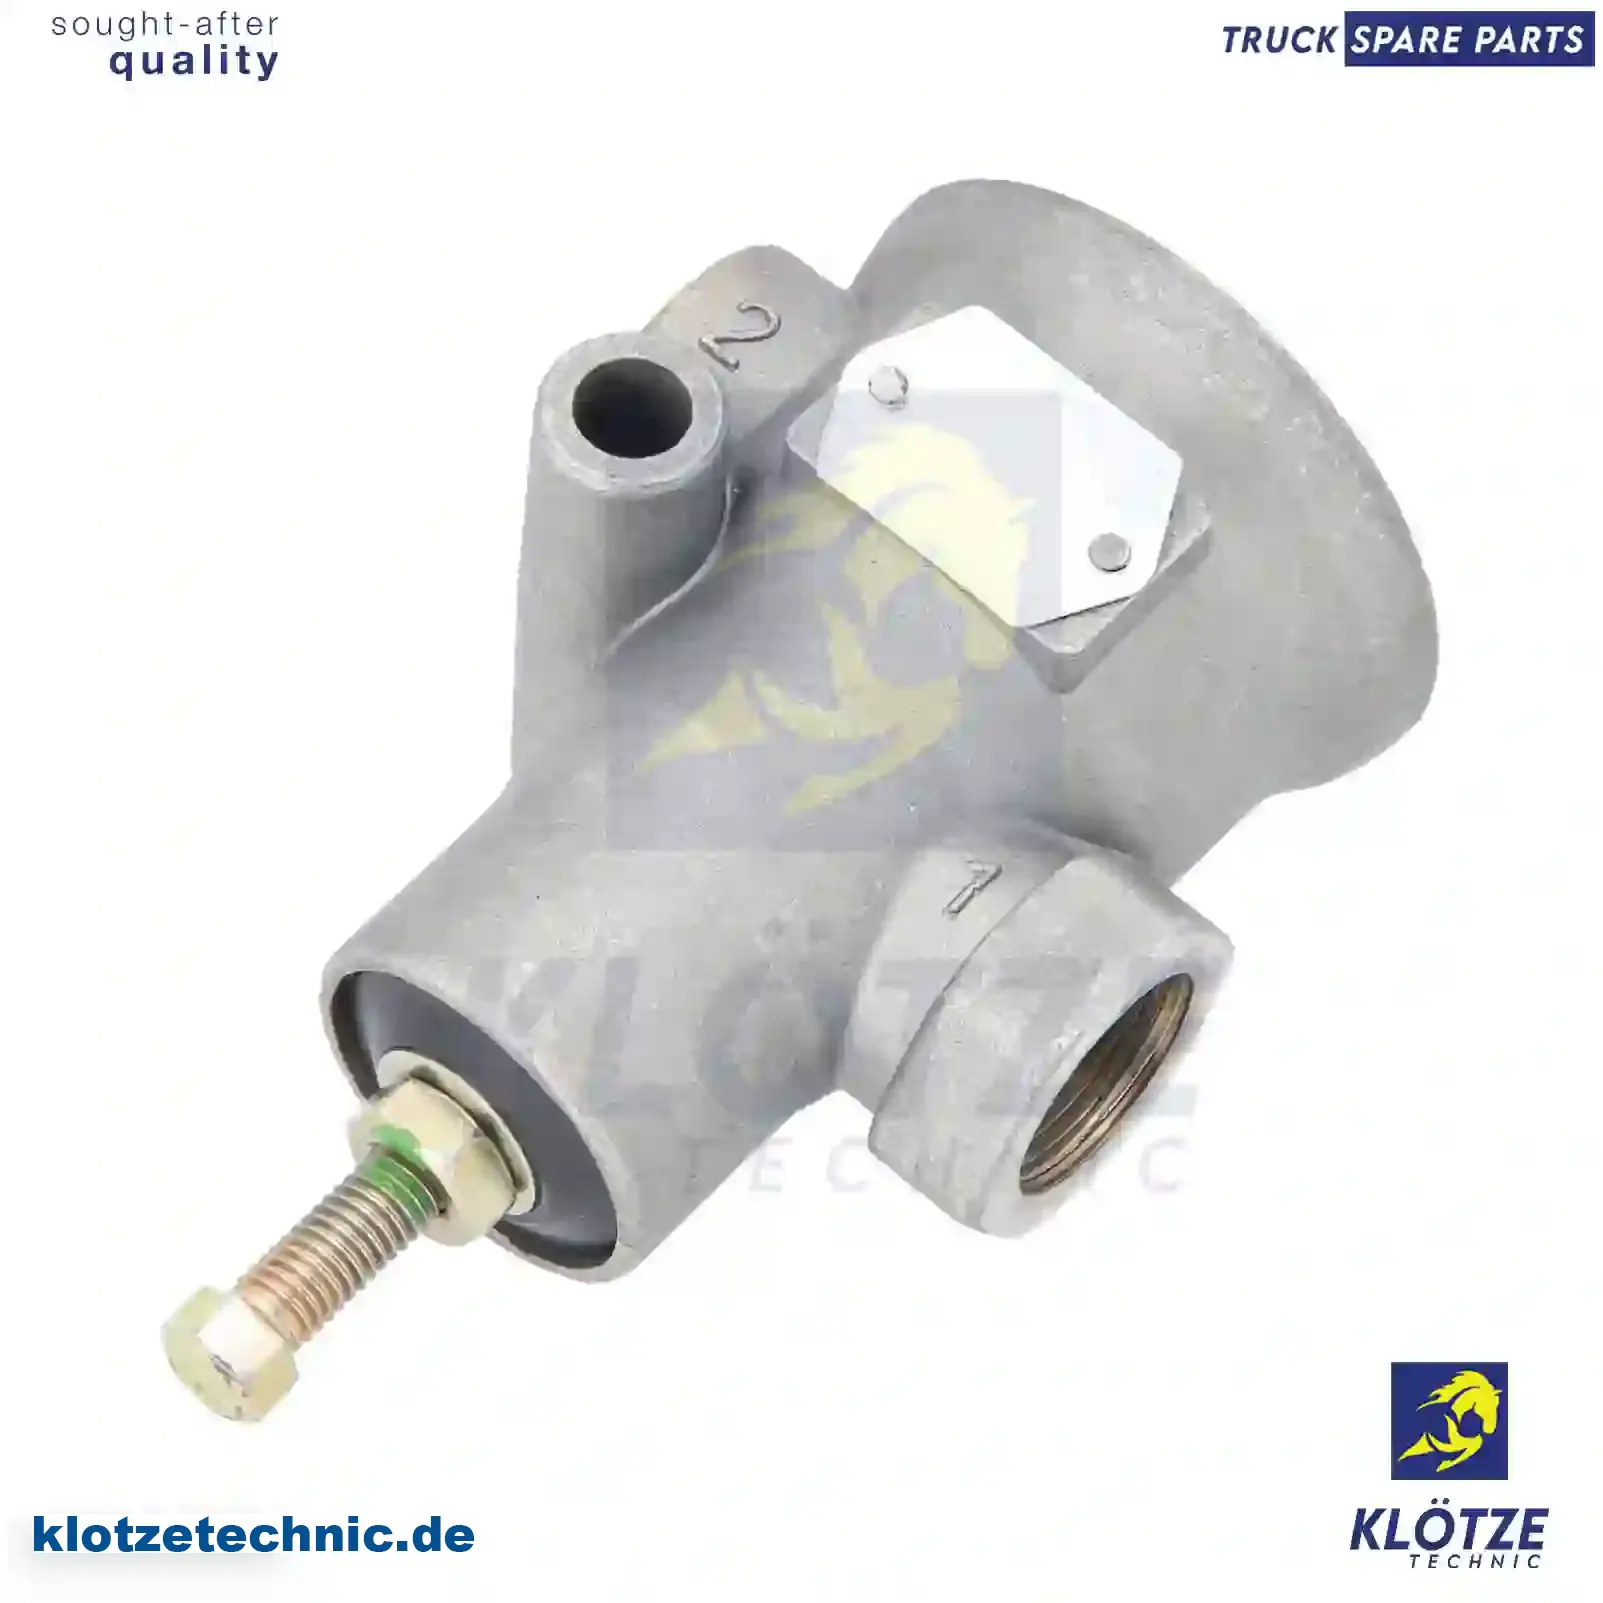 Pressure limiting valve, 1587071 || Klötze Technic